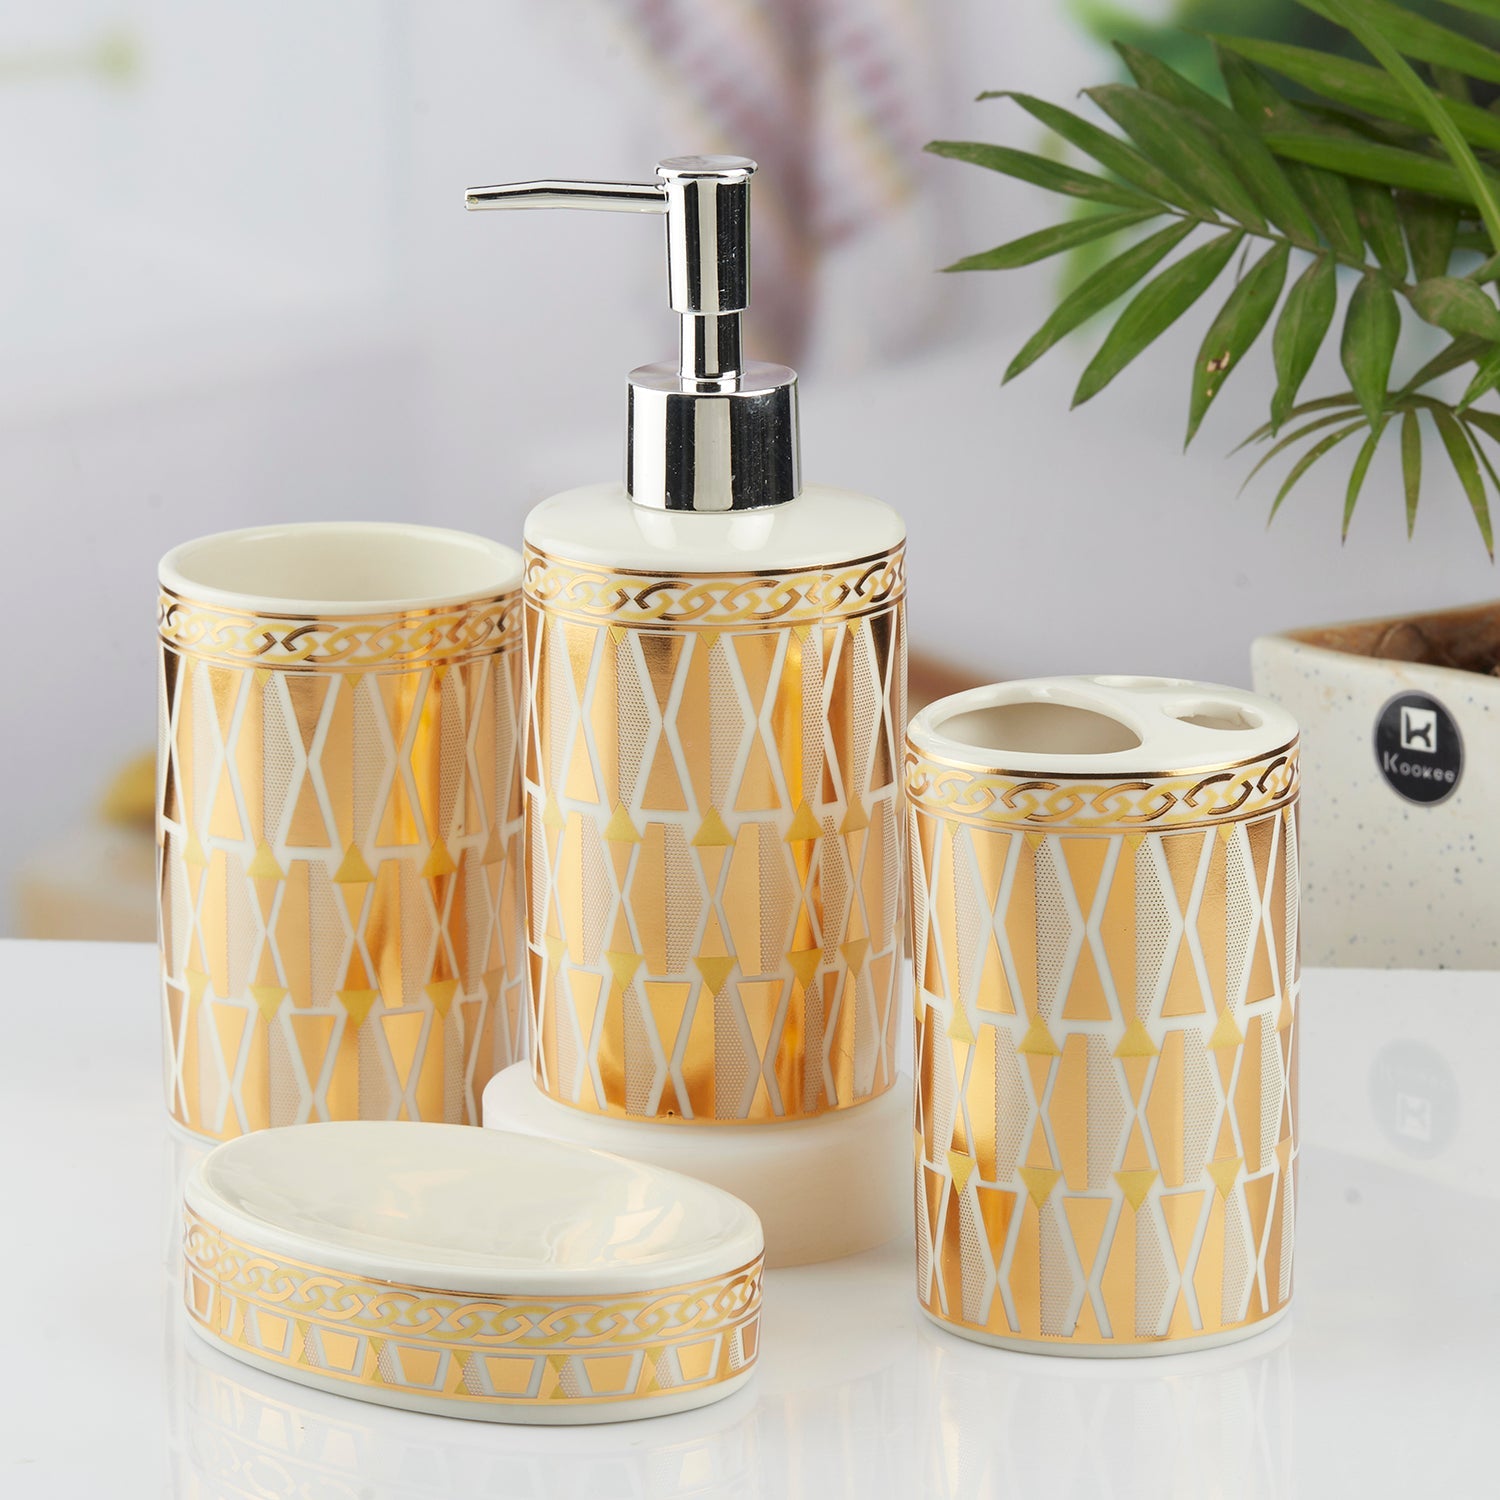 Ceramic Bathroom Set of 4 with Soap Dispenser (10394)